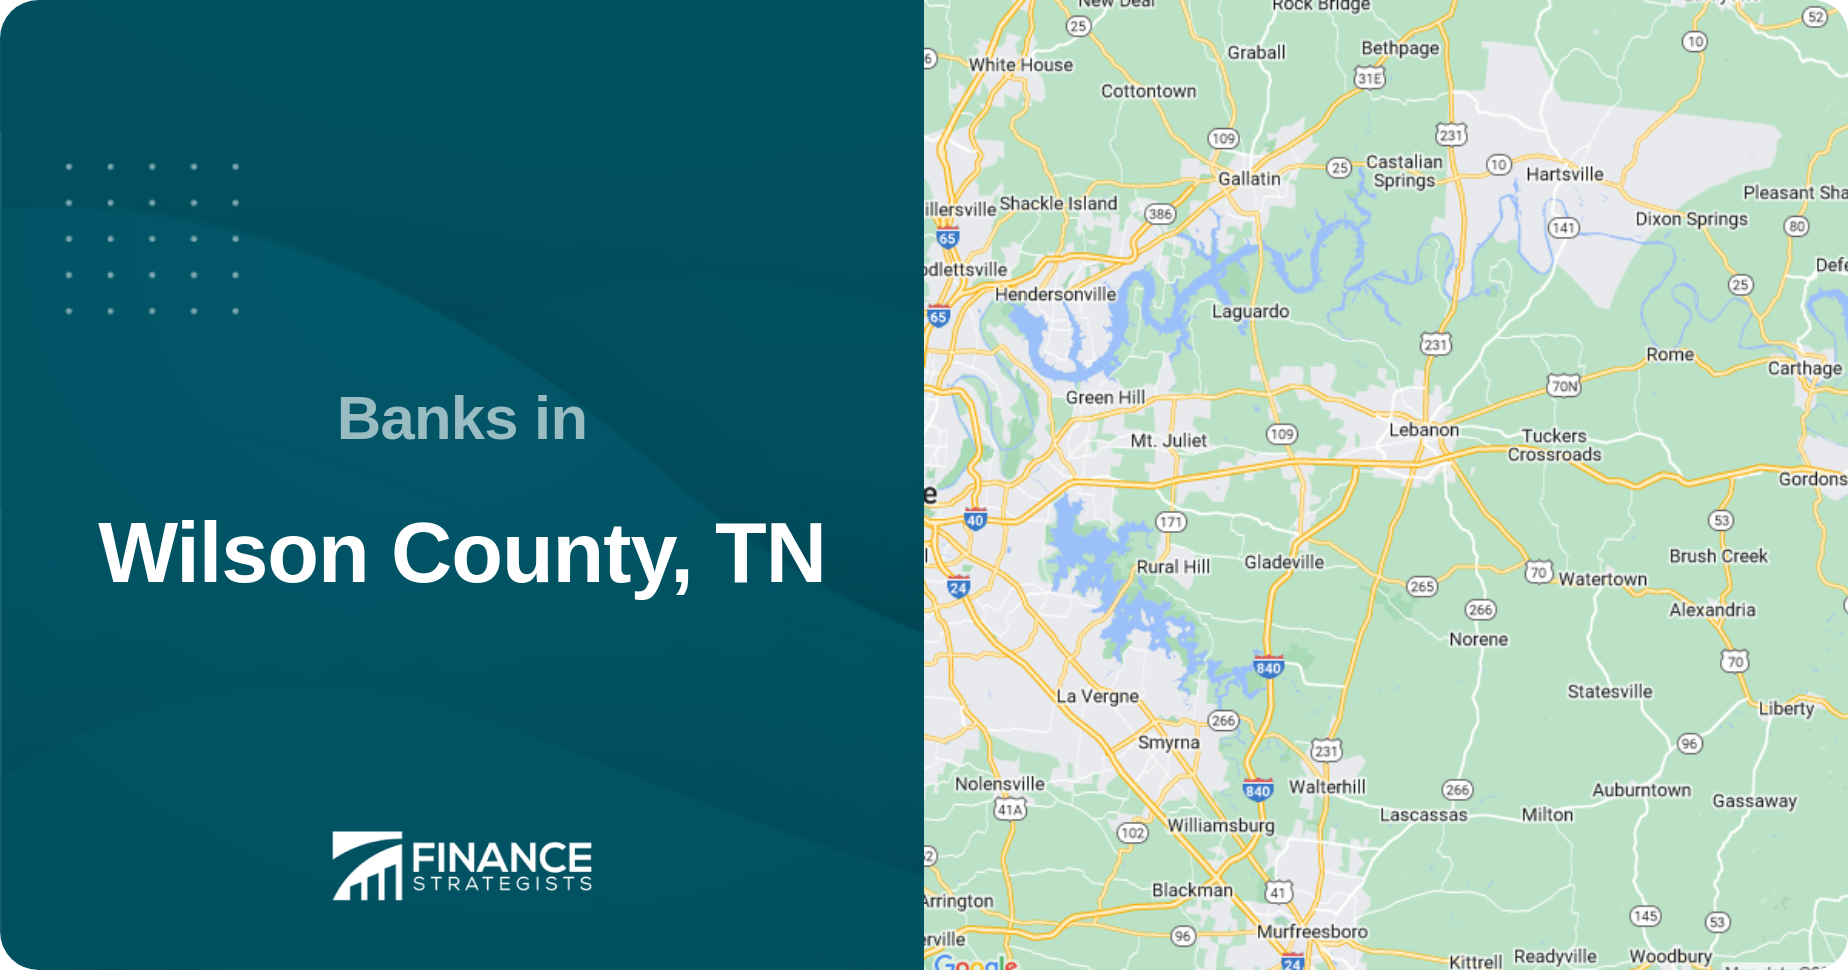 Banks in Wilson County, TN